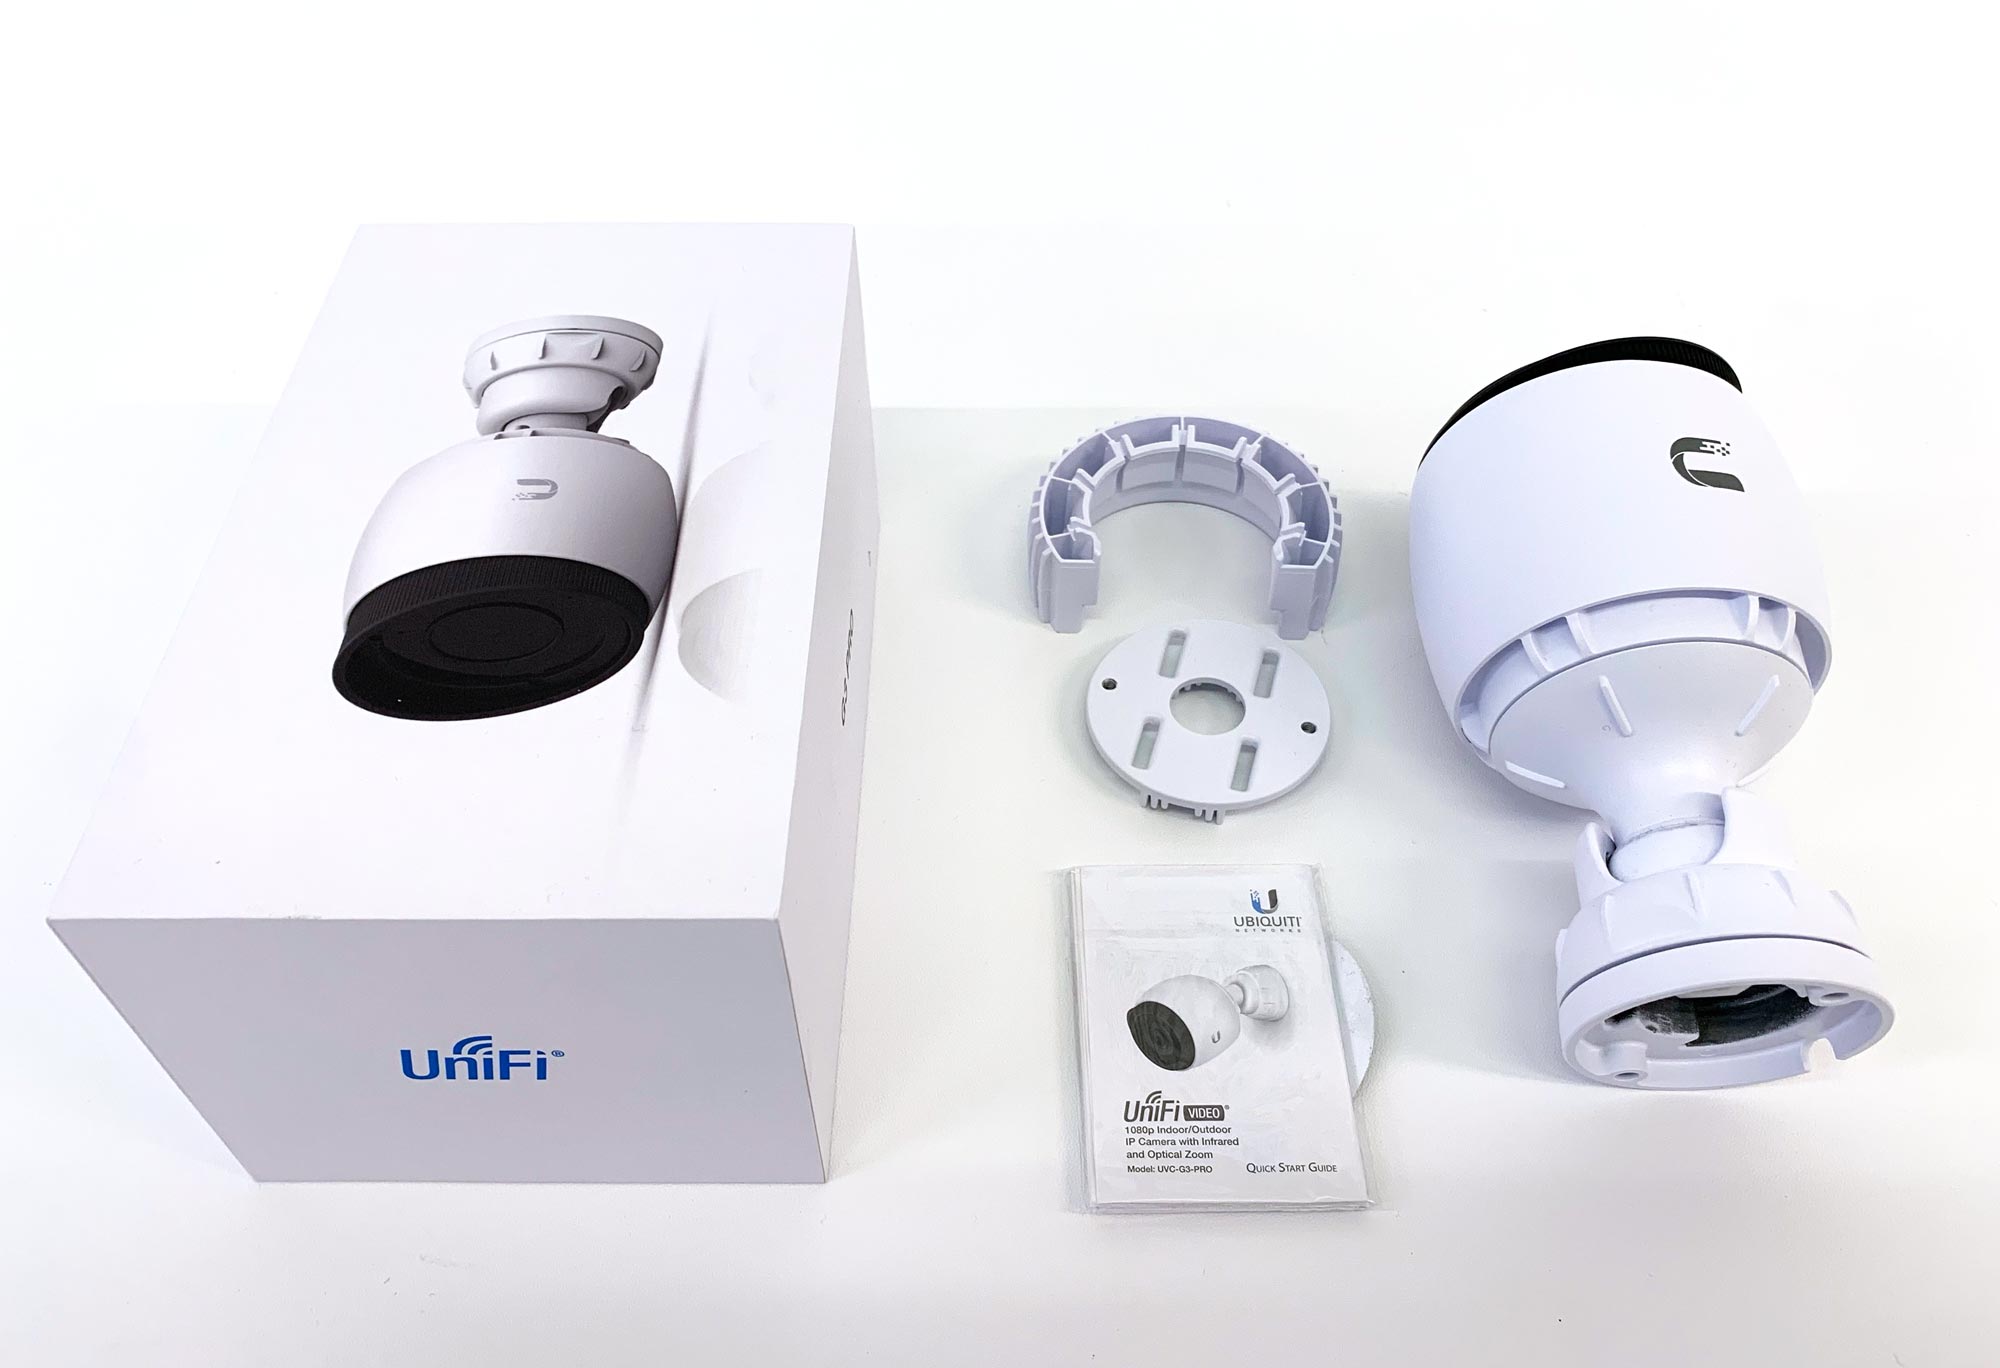 UVC-G3-PRO - UniFi Protect G3 PRO Camera